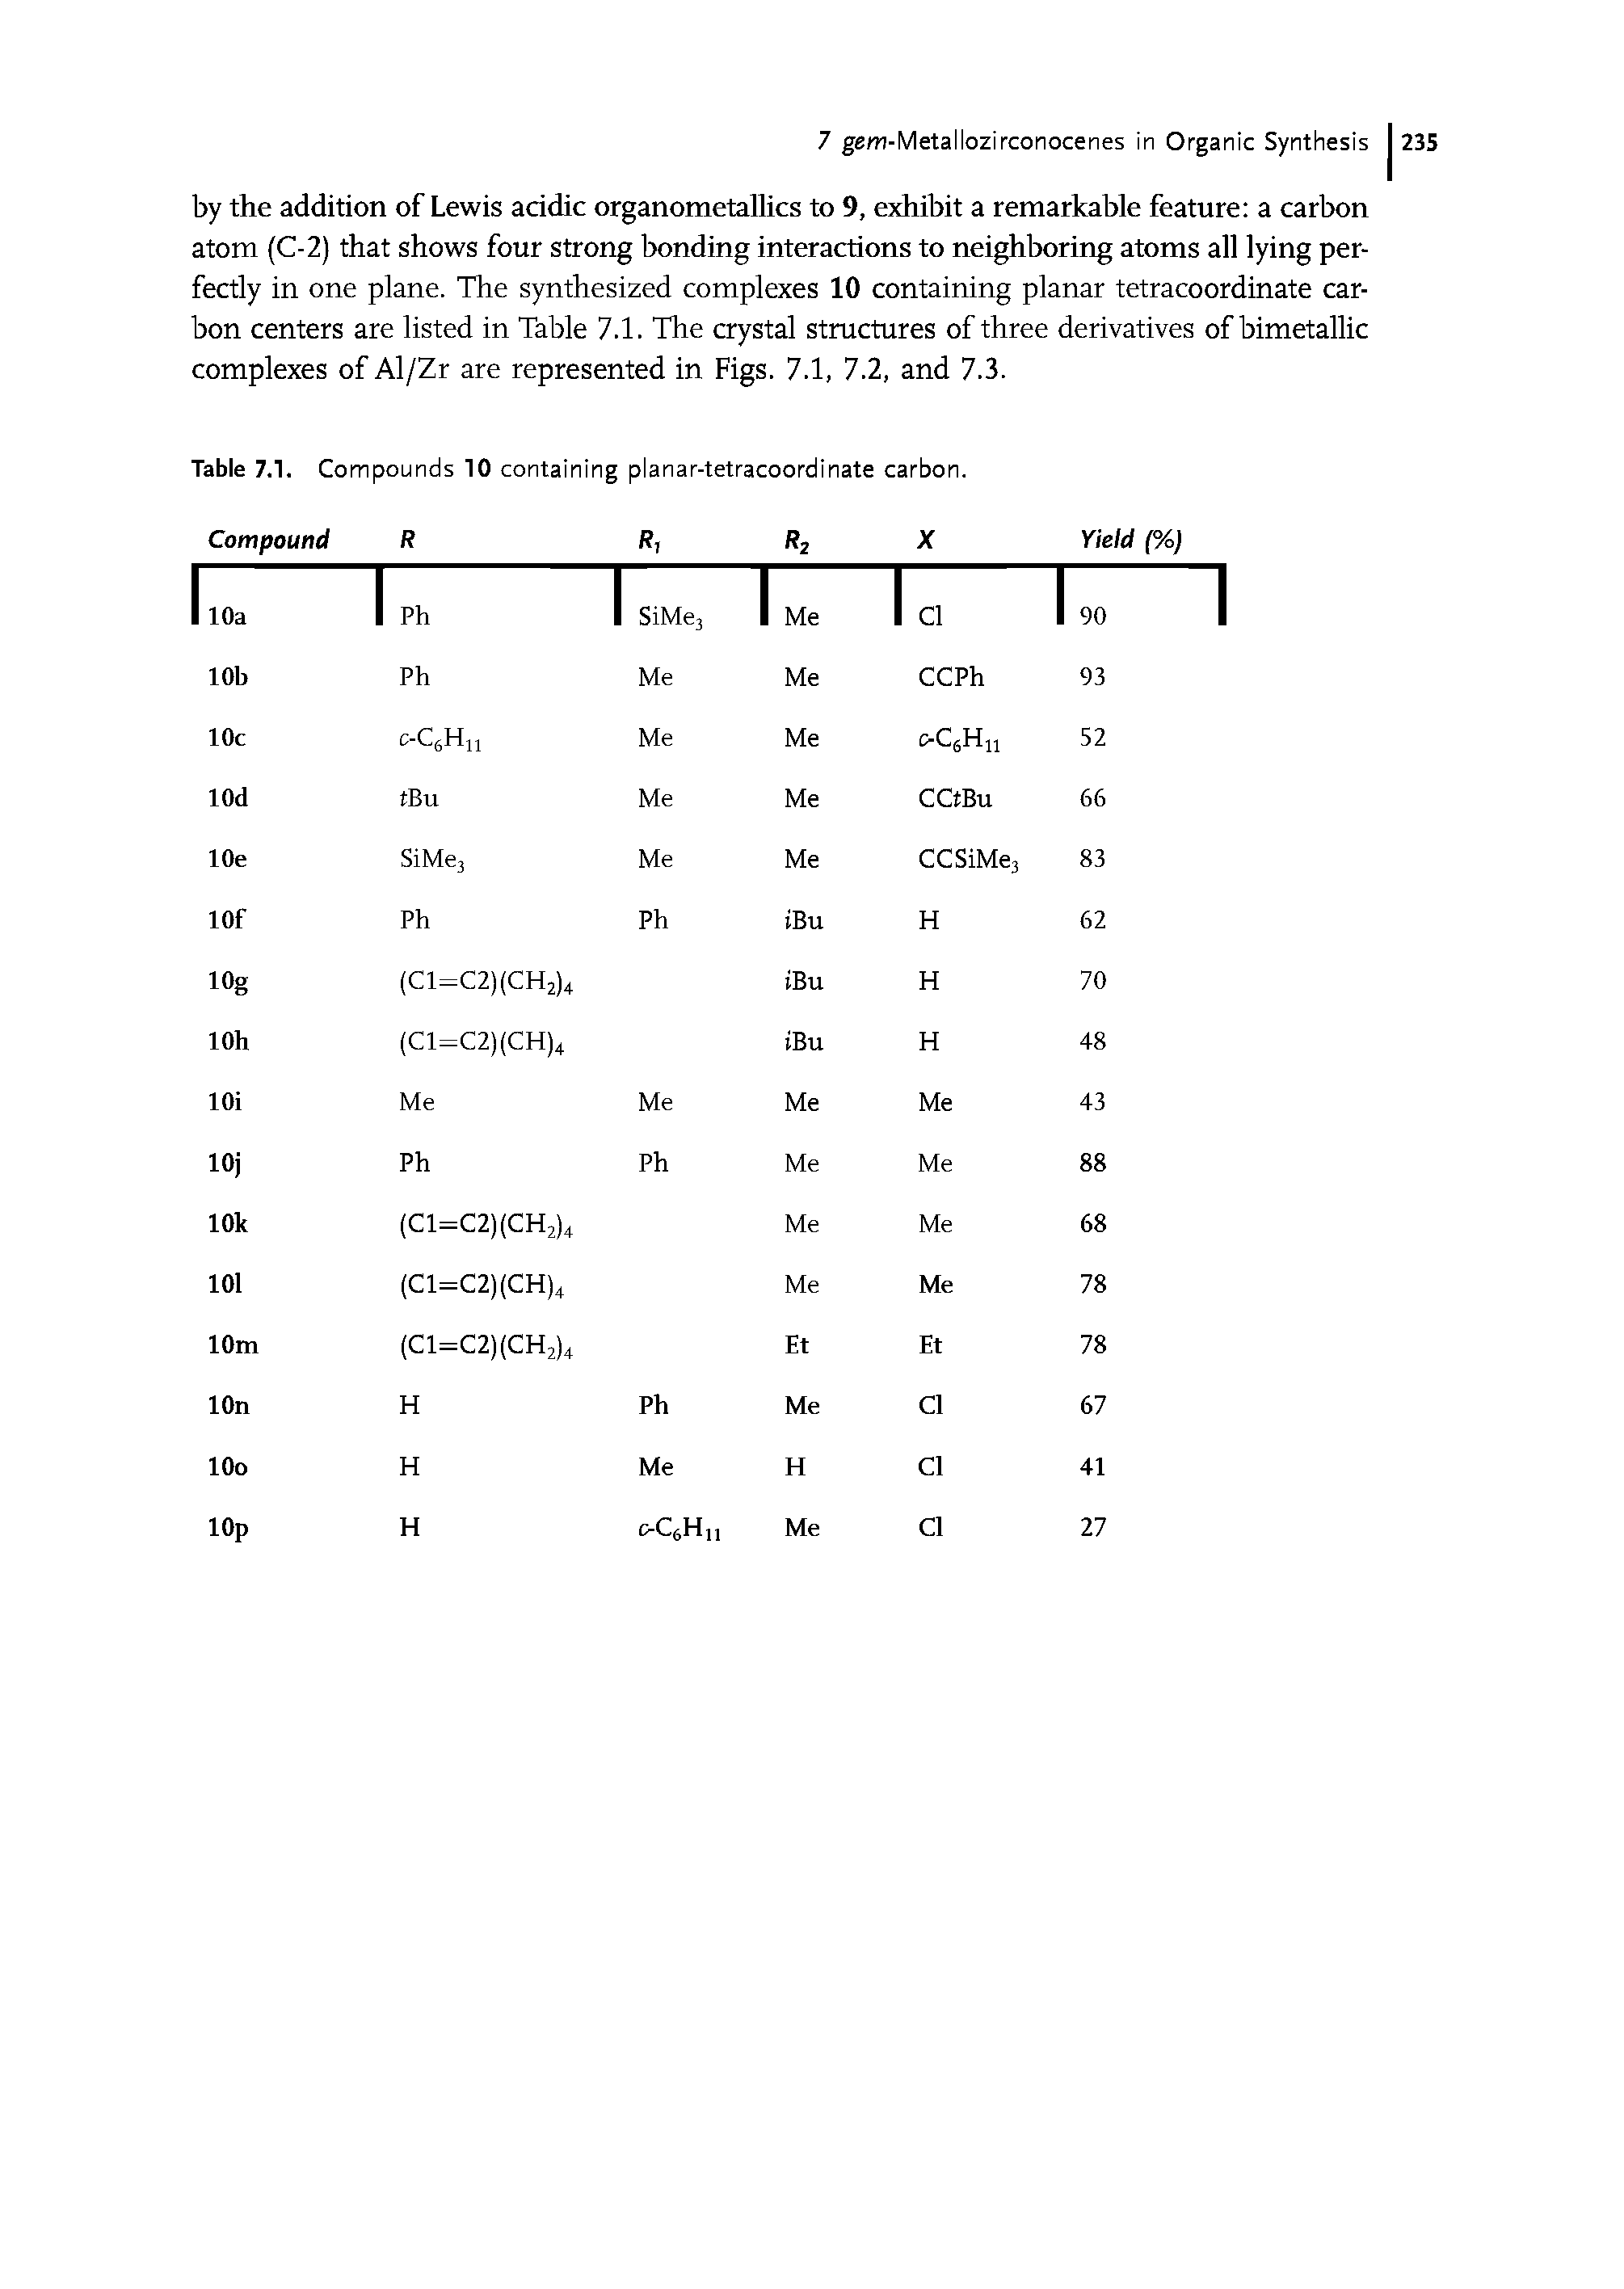 Table 7.1. Compounds 10 containing planar-tetracoordinate carbon.